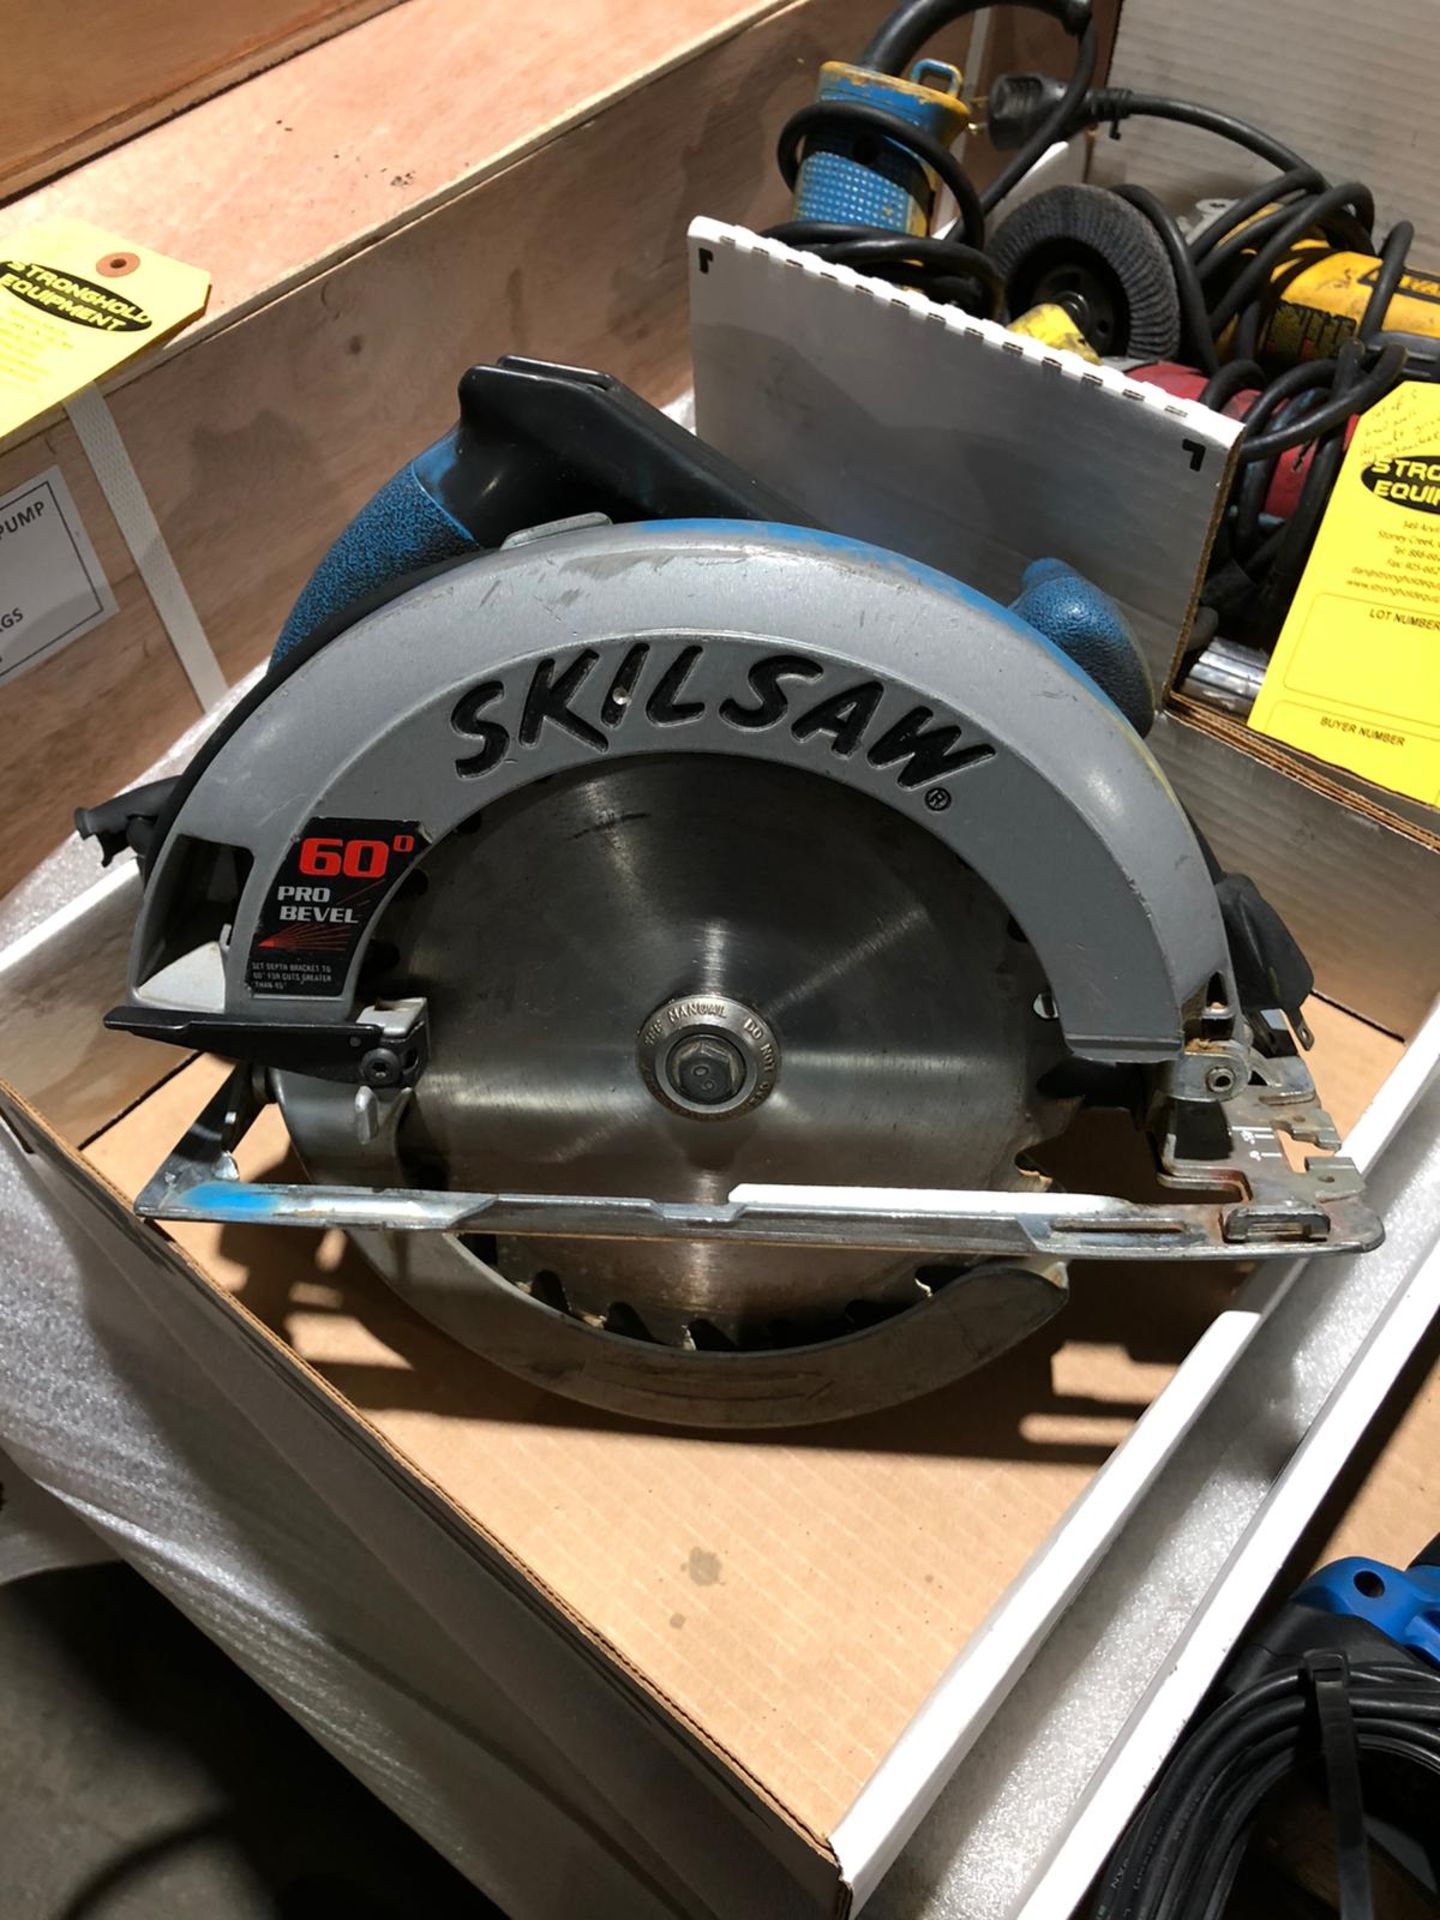 Skilsaw Professional Circular Saw Unit *** FROM 5-STAR RIGGING